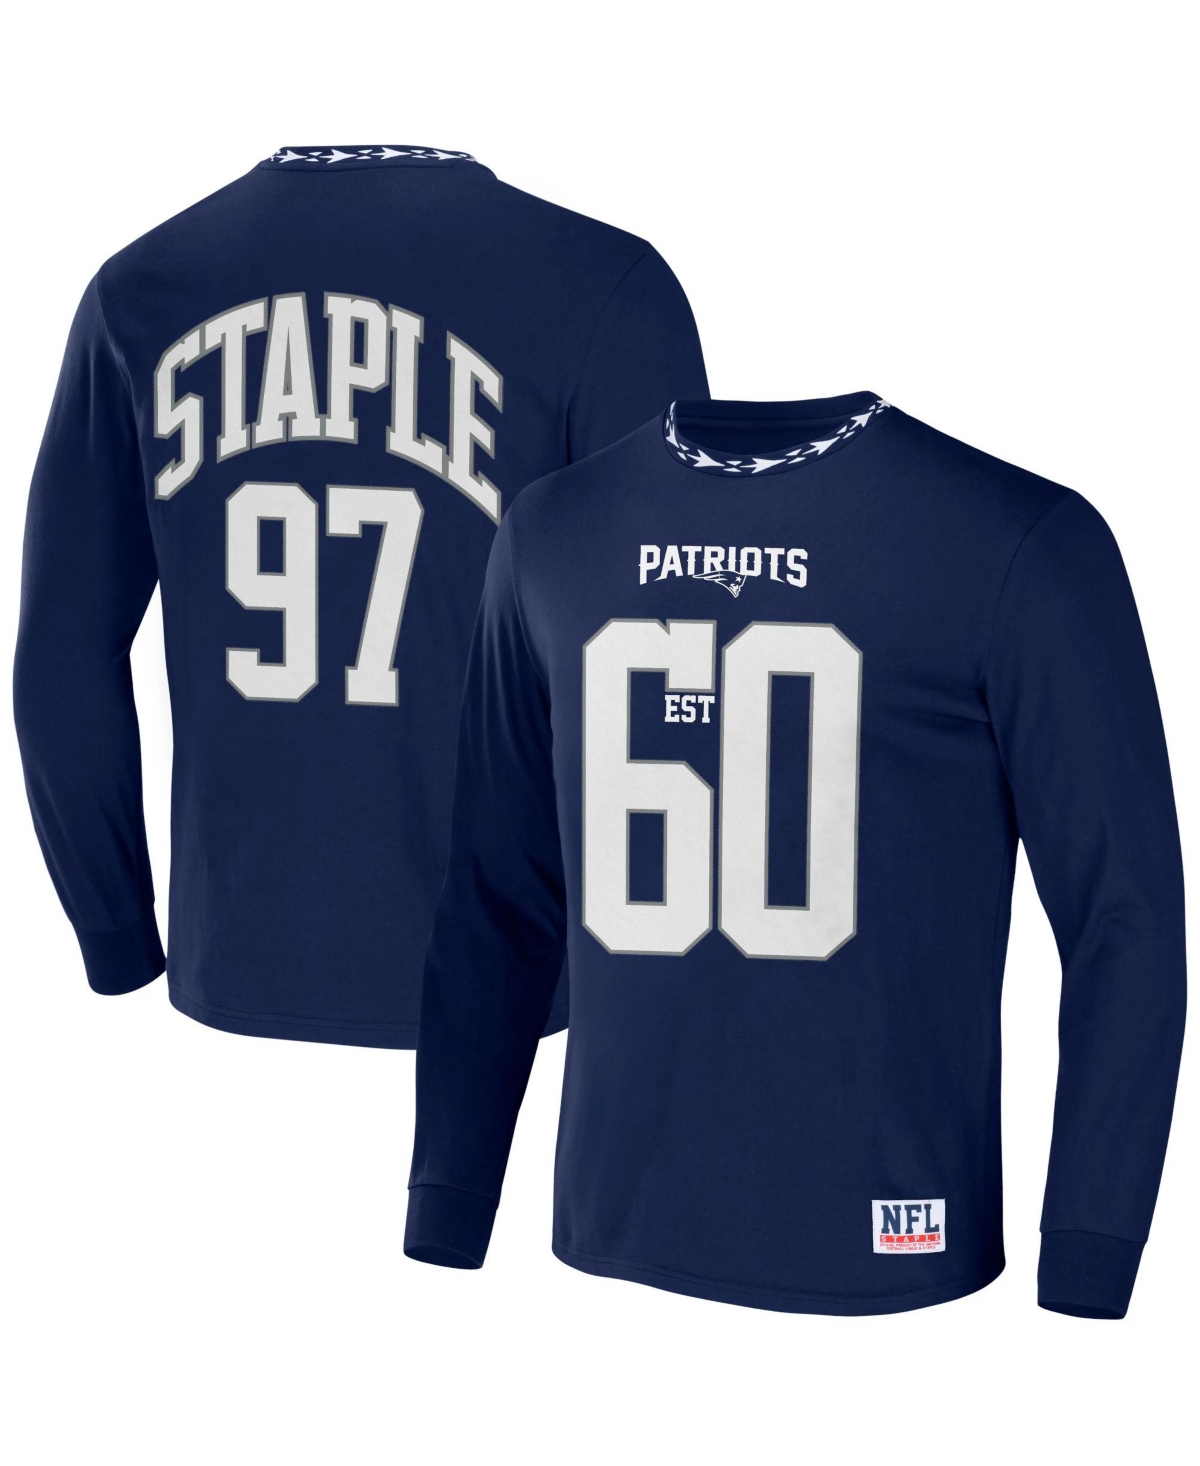 Men's Nfl X Staple Navy New England Patriots Core Long Sleeve Jersey Style T-shirt - Navy